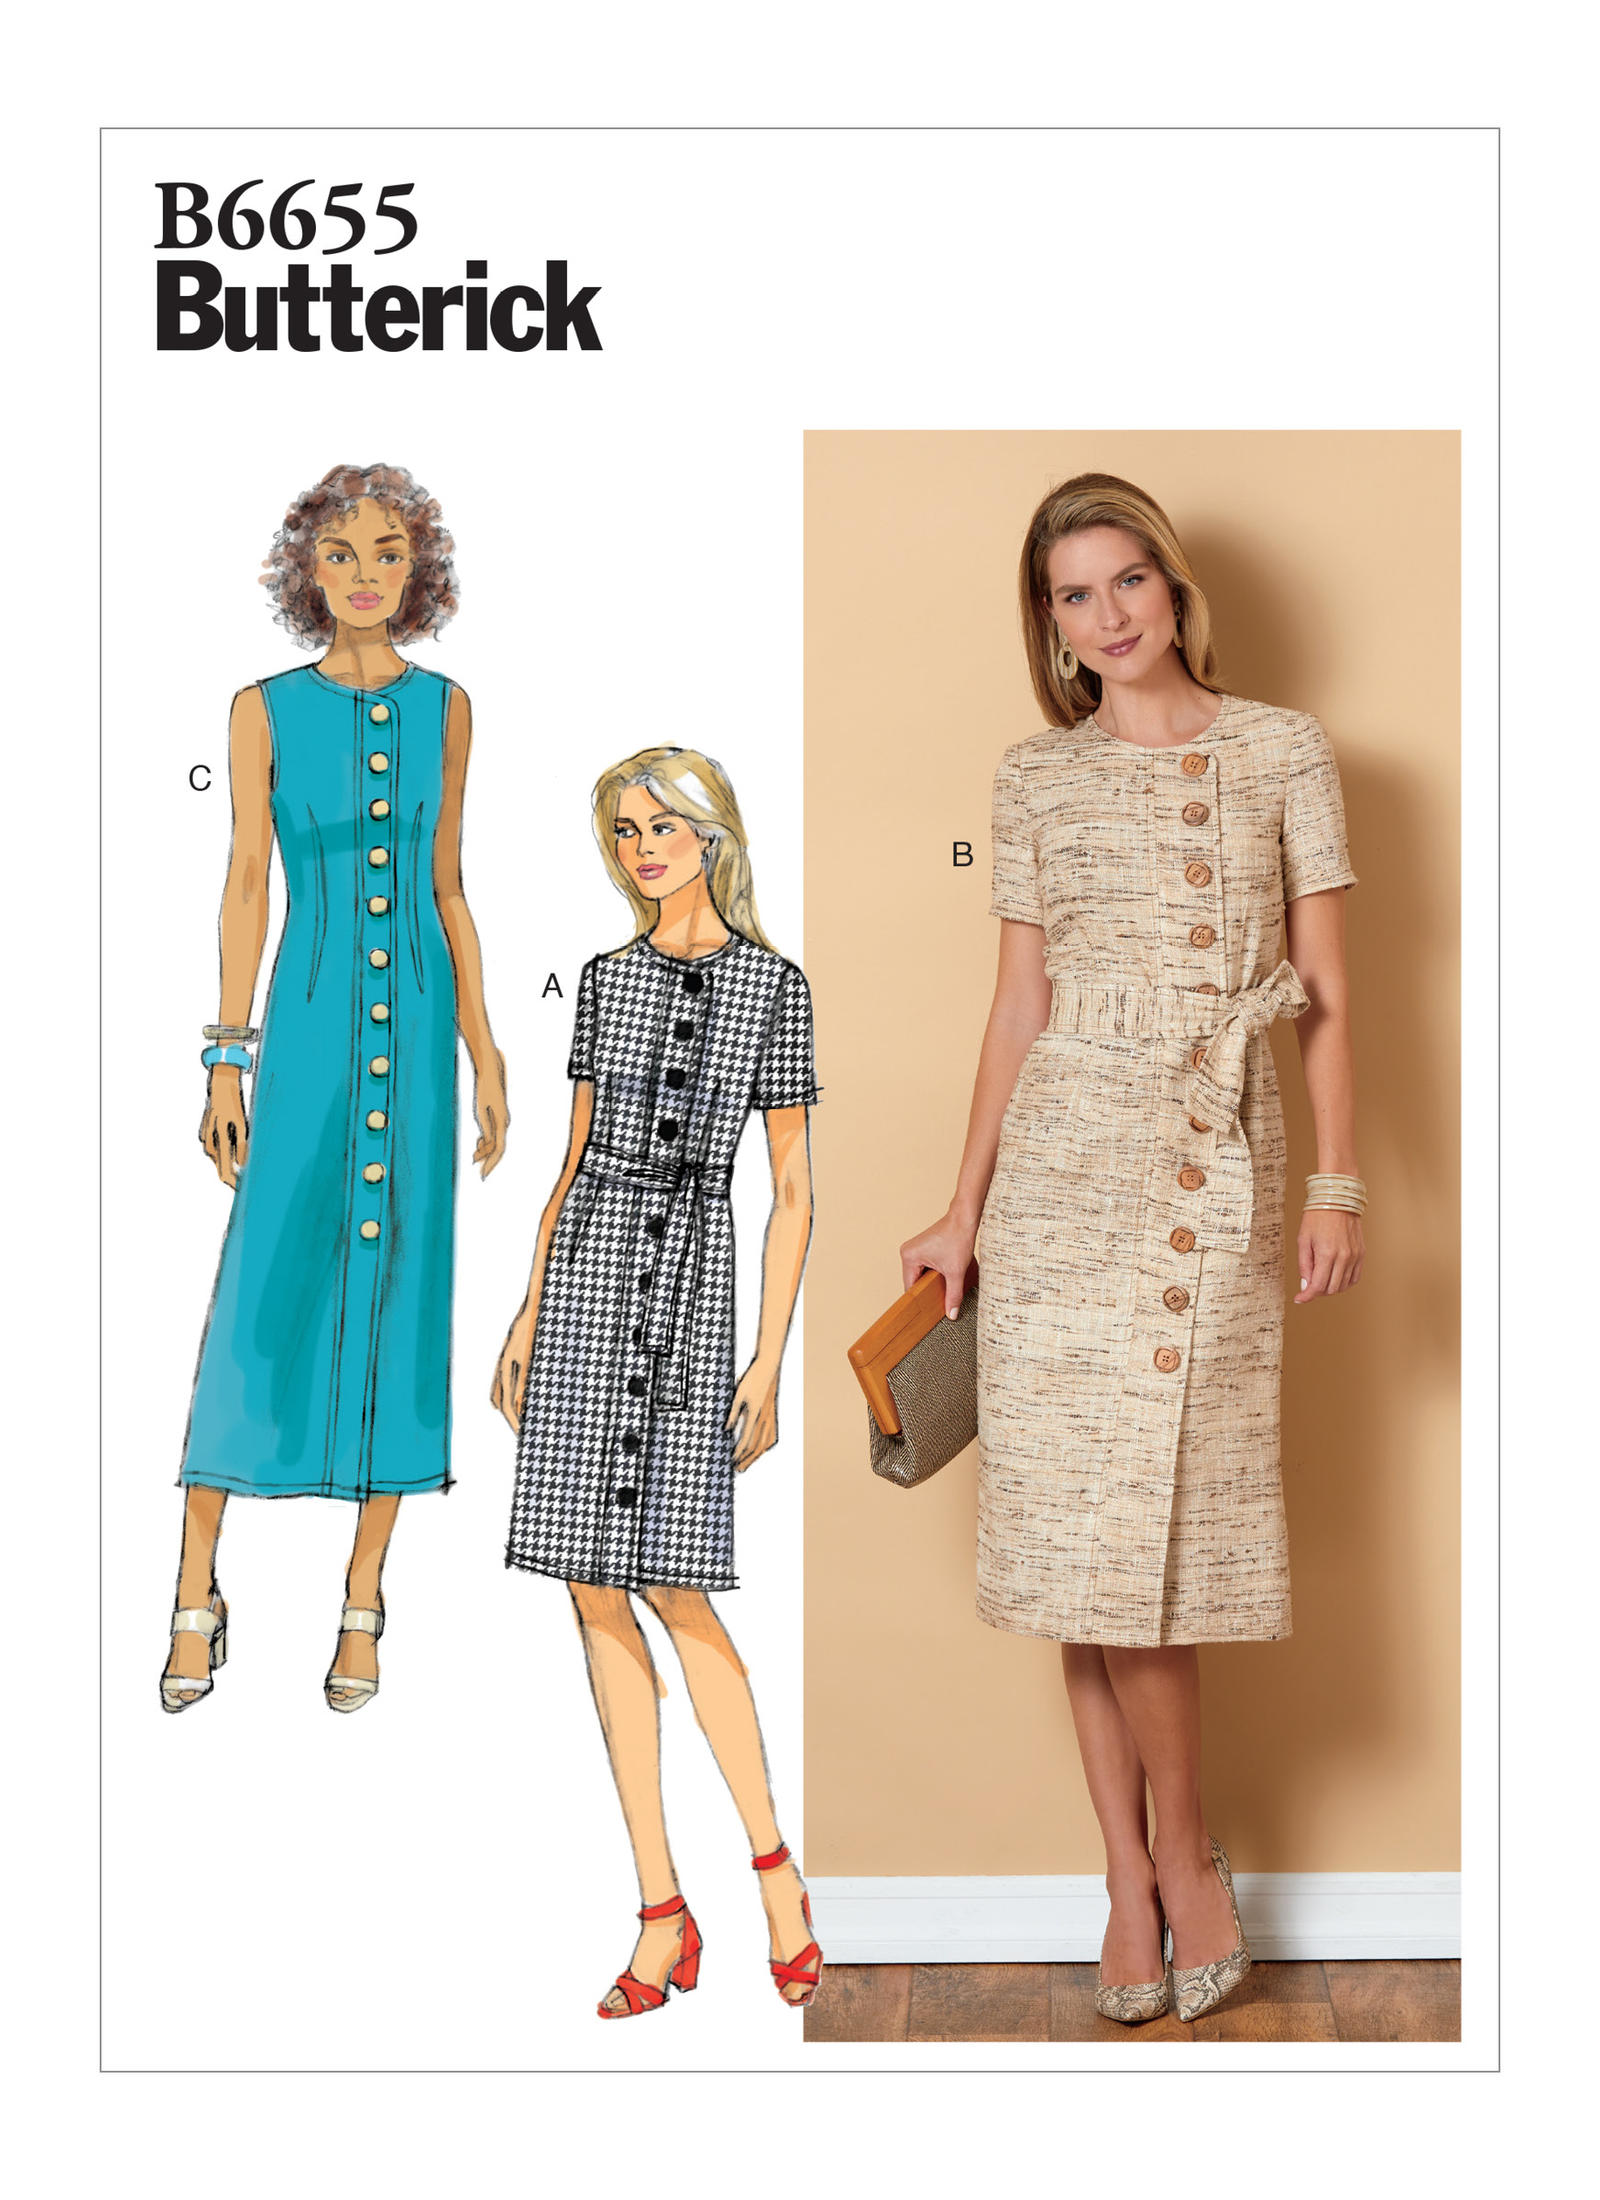 butterick patterns catalogue online LeahanCaidy